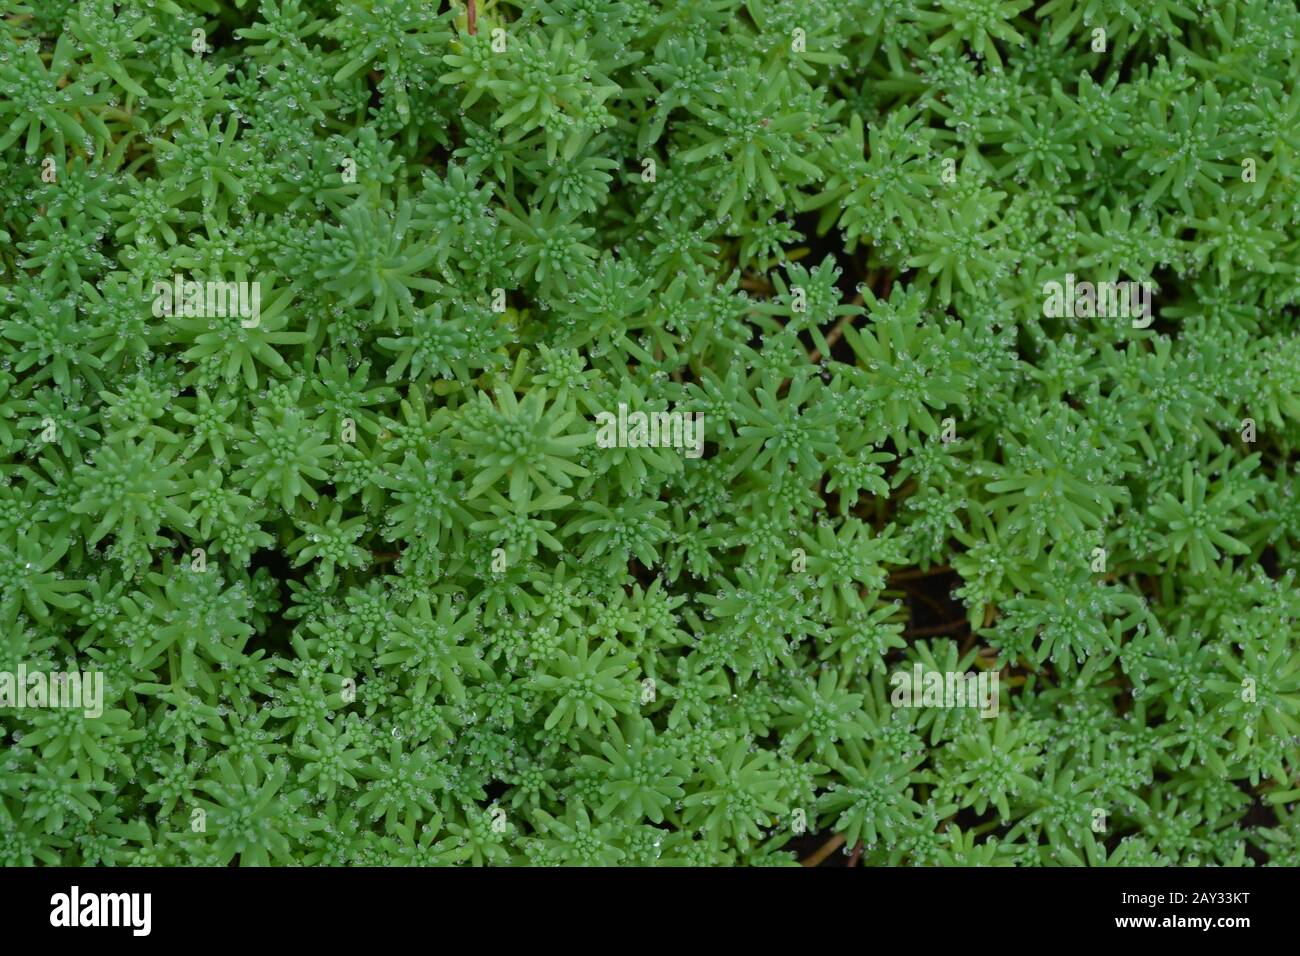 Stonecrop. Hare cabbage. Sedum. Green moss. Decorative grassy carpet. Flowerbed. Ornamental garden plants. Close-up Stock Photo